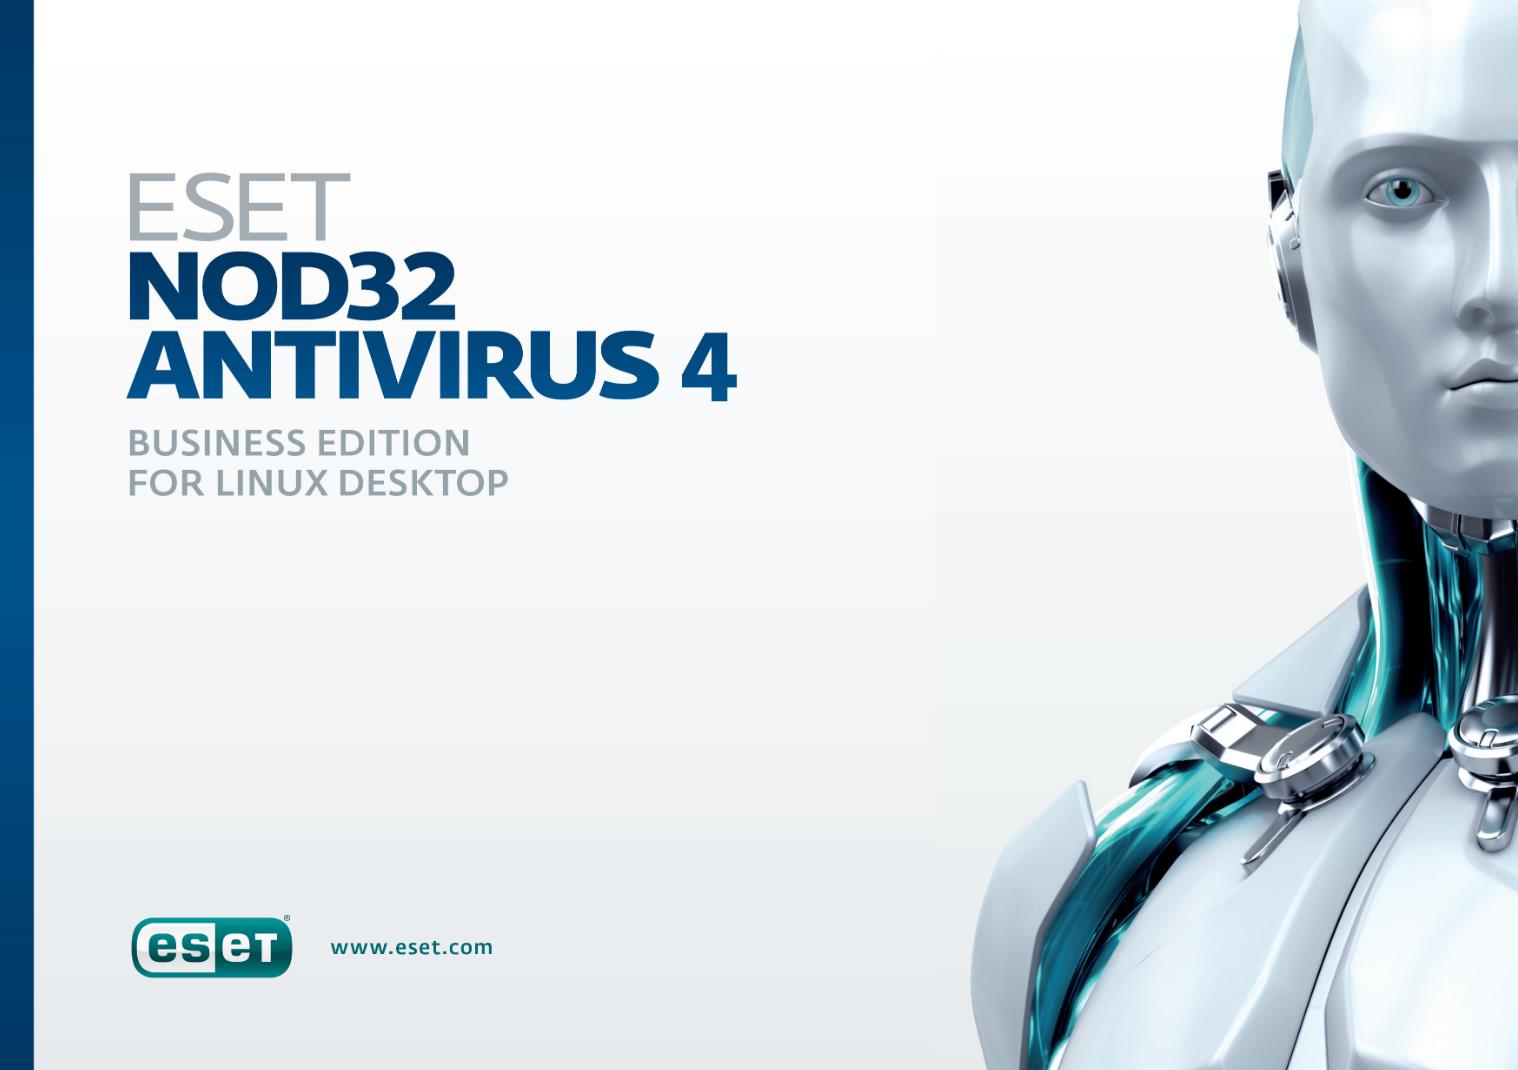 ESET NOD32 Antivirus Business Edition for Linux Desktop - Crossgrade-Abonnementlizenz (1 Jahr) - 1 Computer - Volumen, Reg. - Stufe D (50-99) - Linux